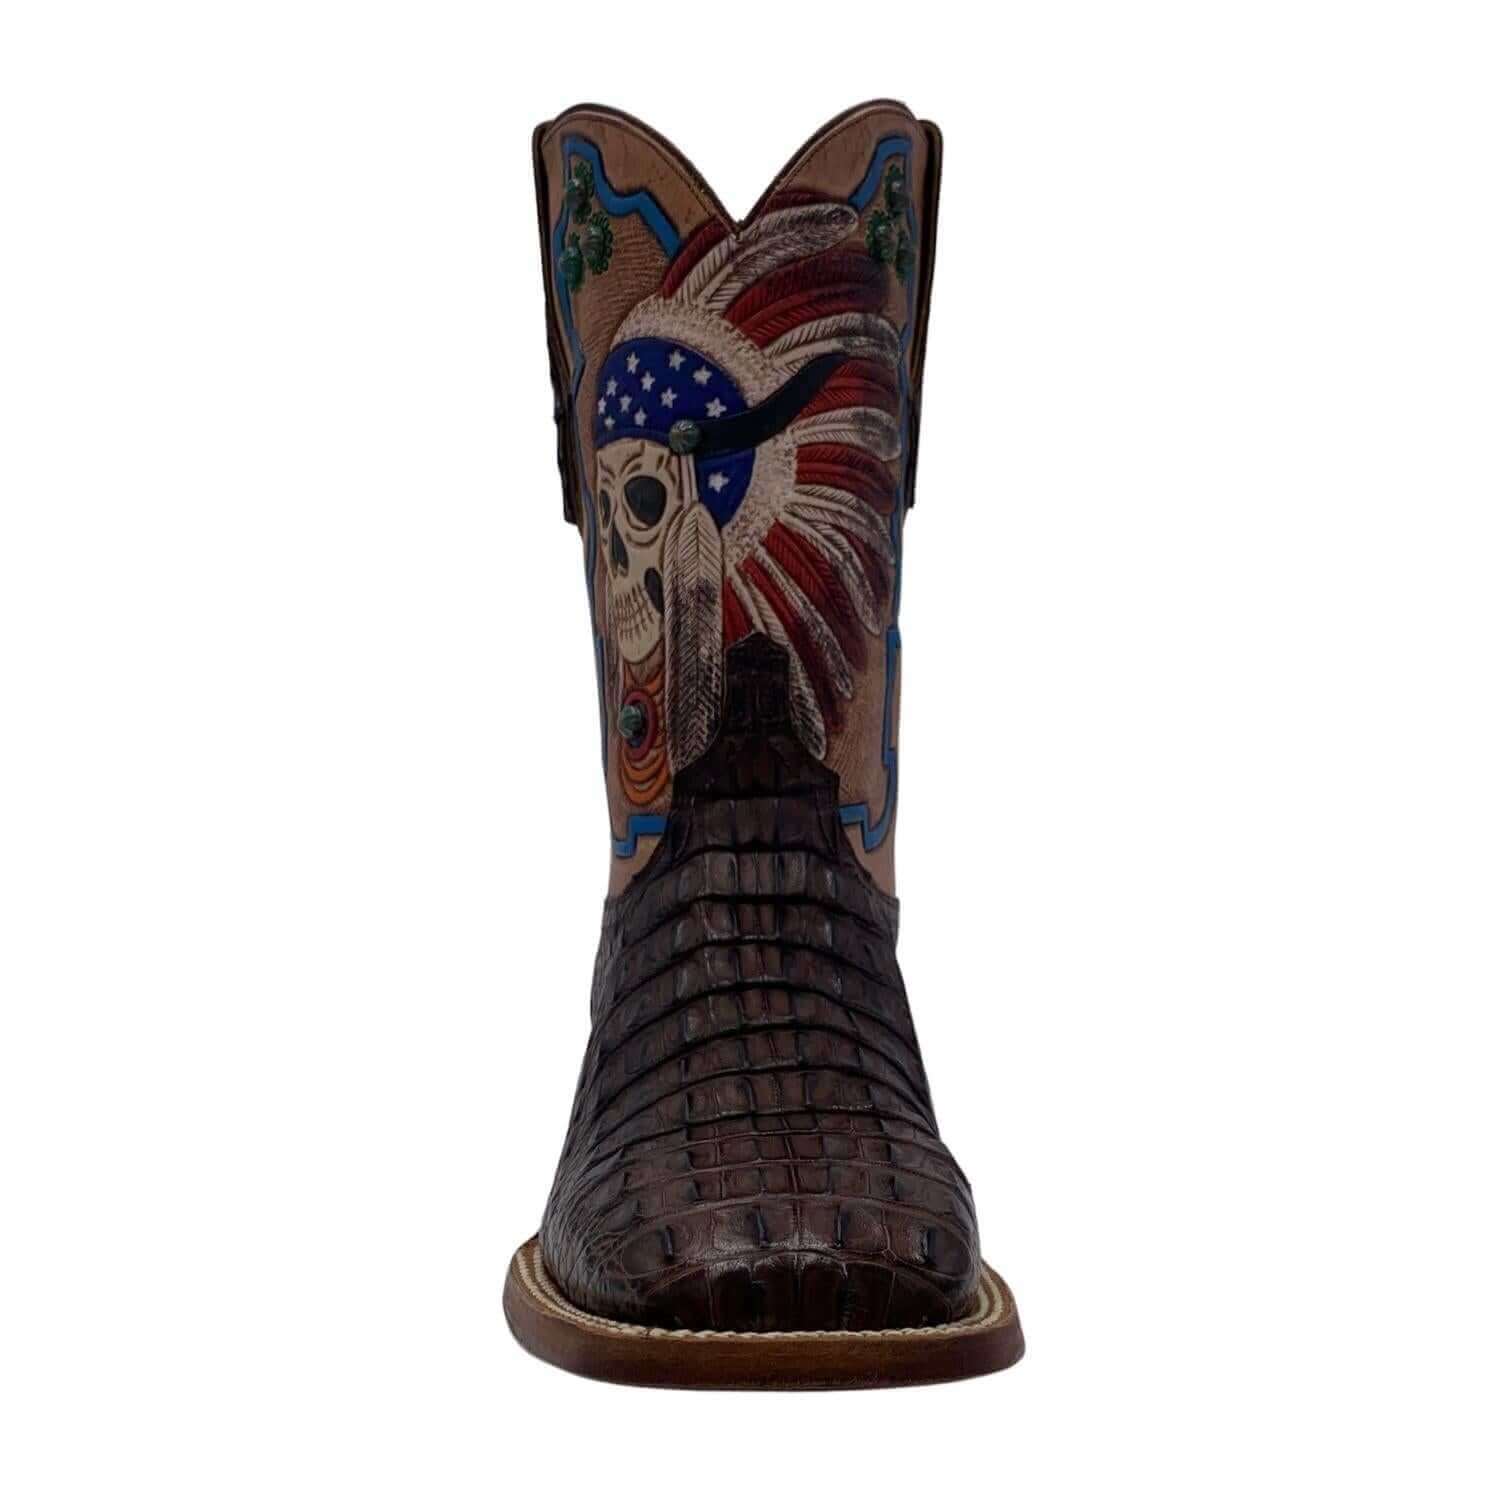 Hornback American Alligator Hand-Tooled Indian Profile, Skull and Totem Mocha - Vaccari BootsHornback American Alligator Hand-Tooled Square Toe Boots